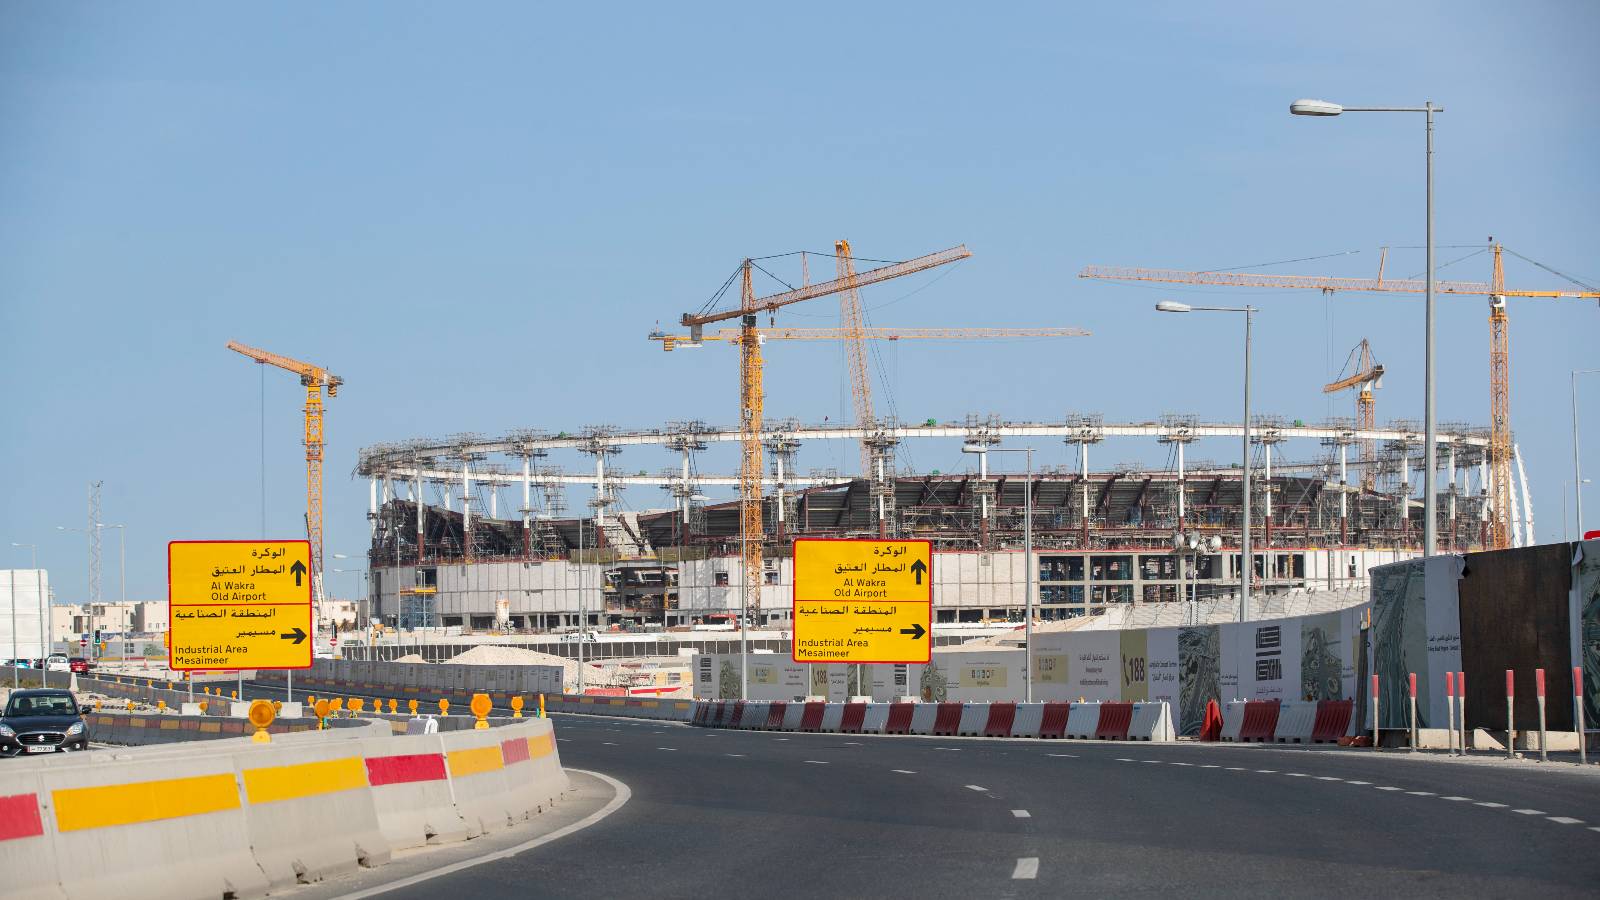 Al Thumama Stadium under construction ahead of the 2022 FIFA World Cup.